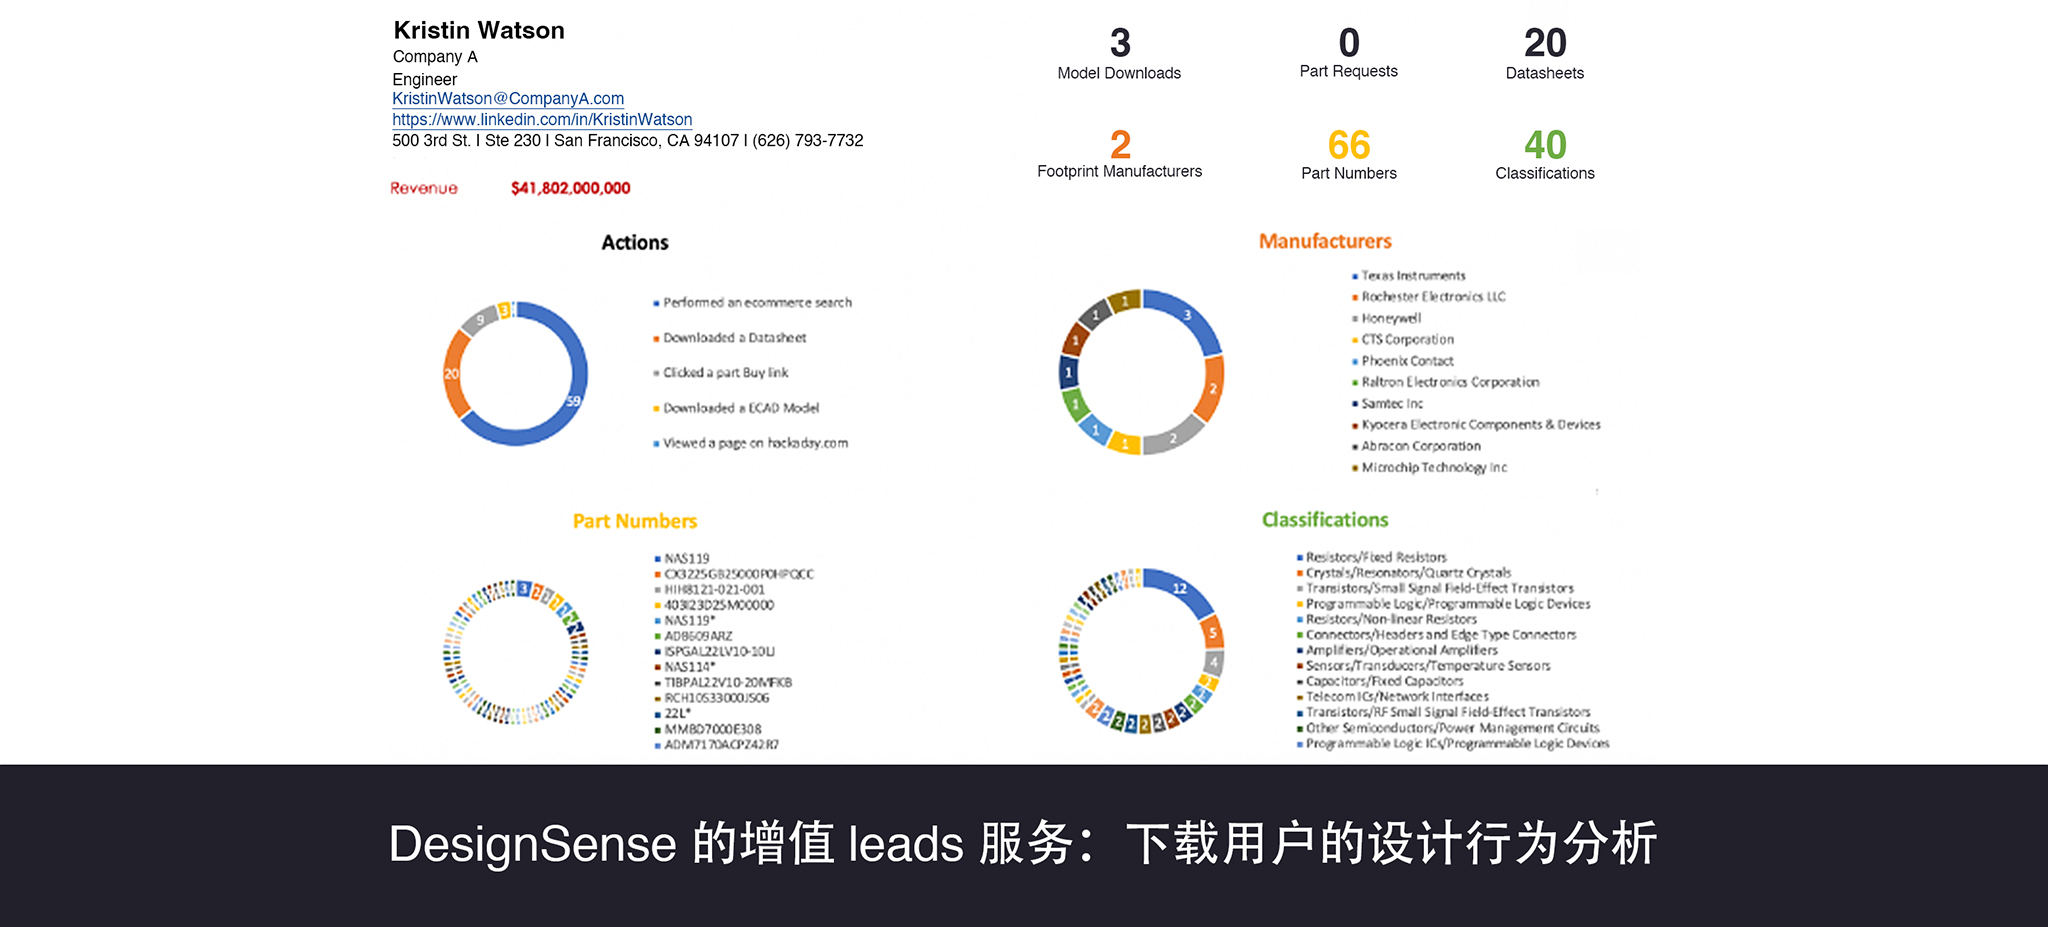 DesignSense 的增值 leads 服务：下载用户的设计行为分析